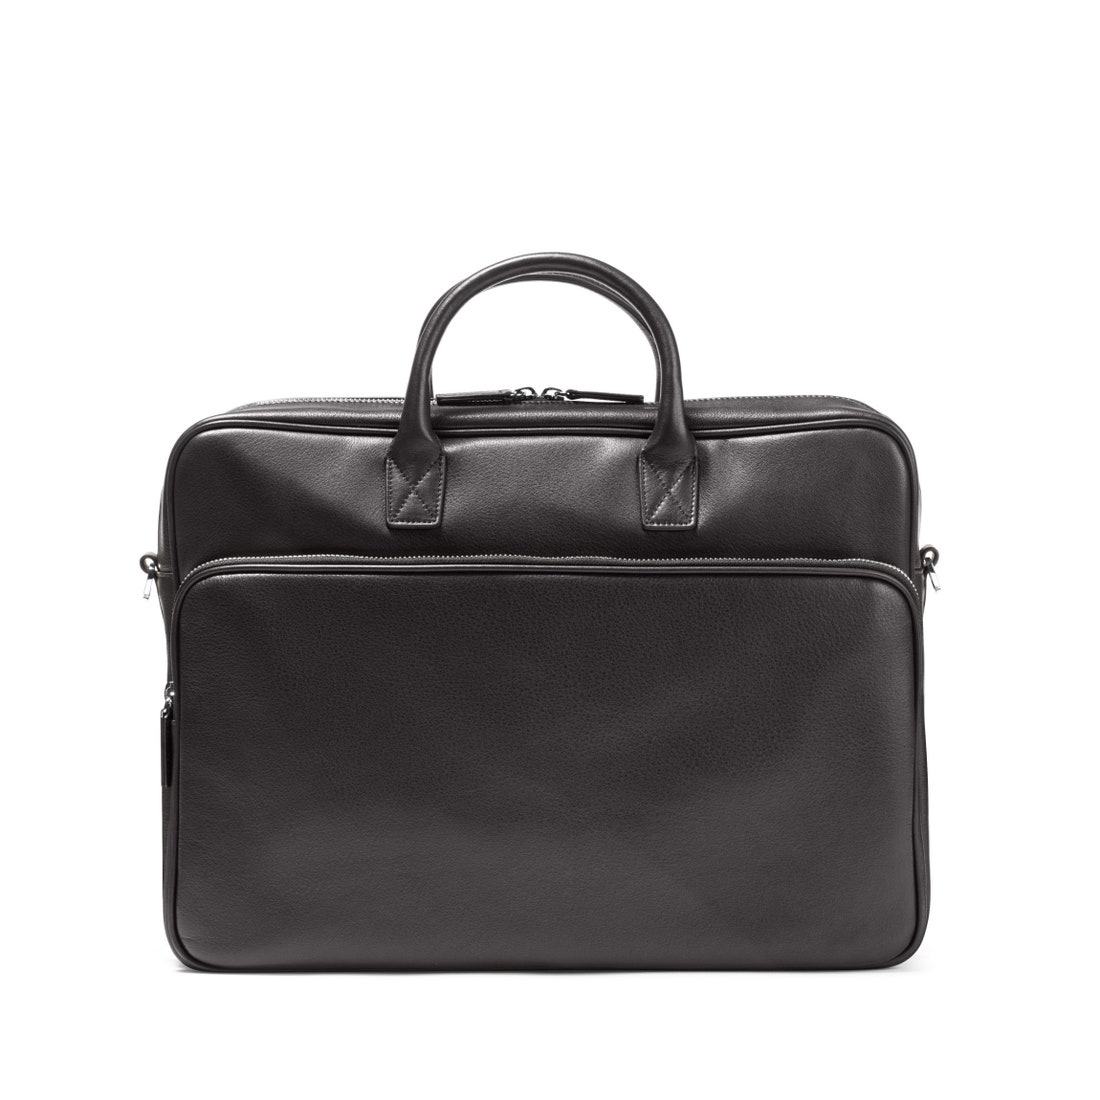 Adam Levine Casual Fashion Black Backpack Backpack Man Woman Travel School Laptop 